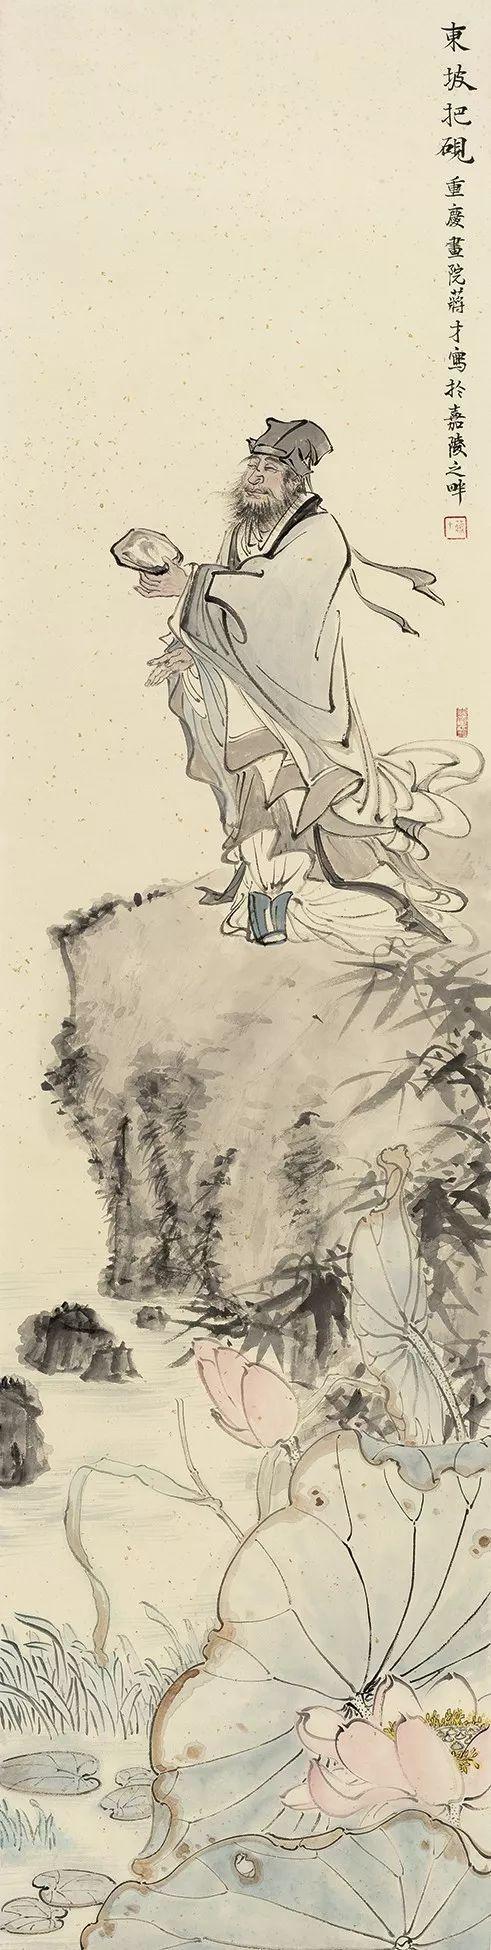 Su Shi and His Inkstone by Jiang Cai